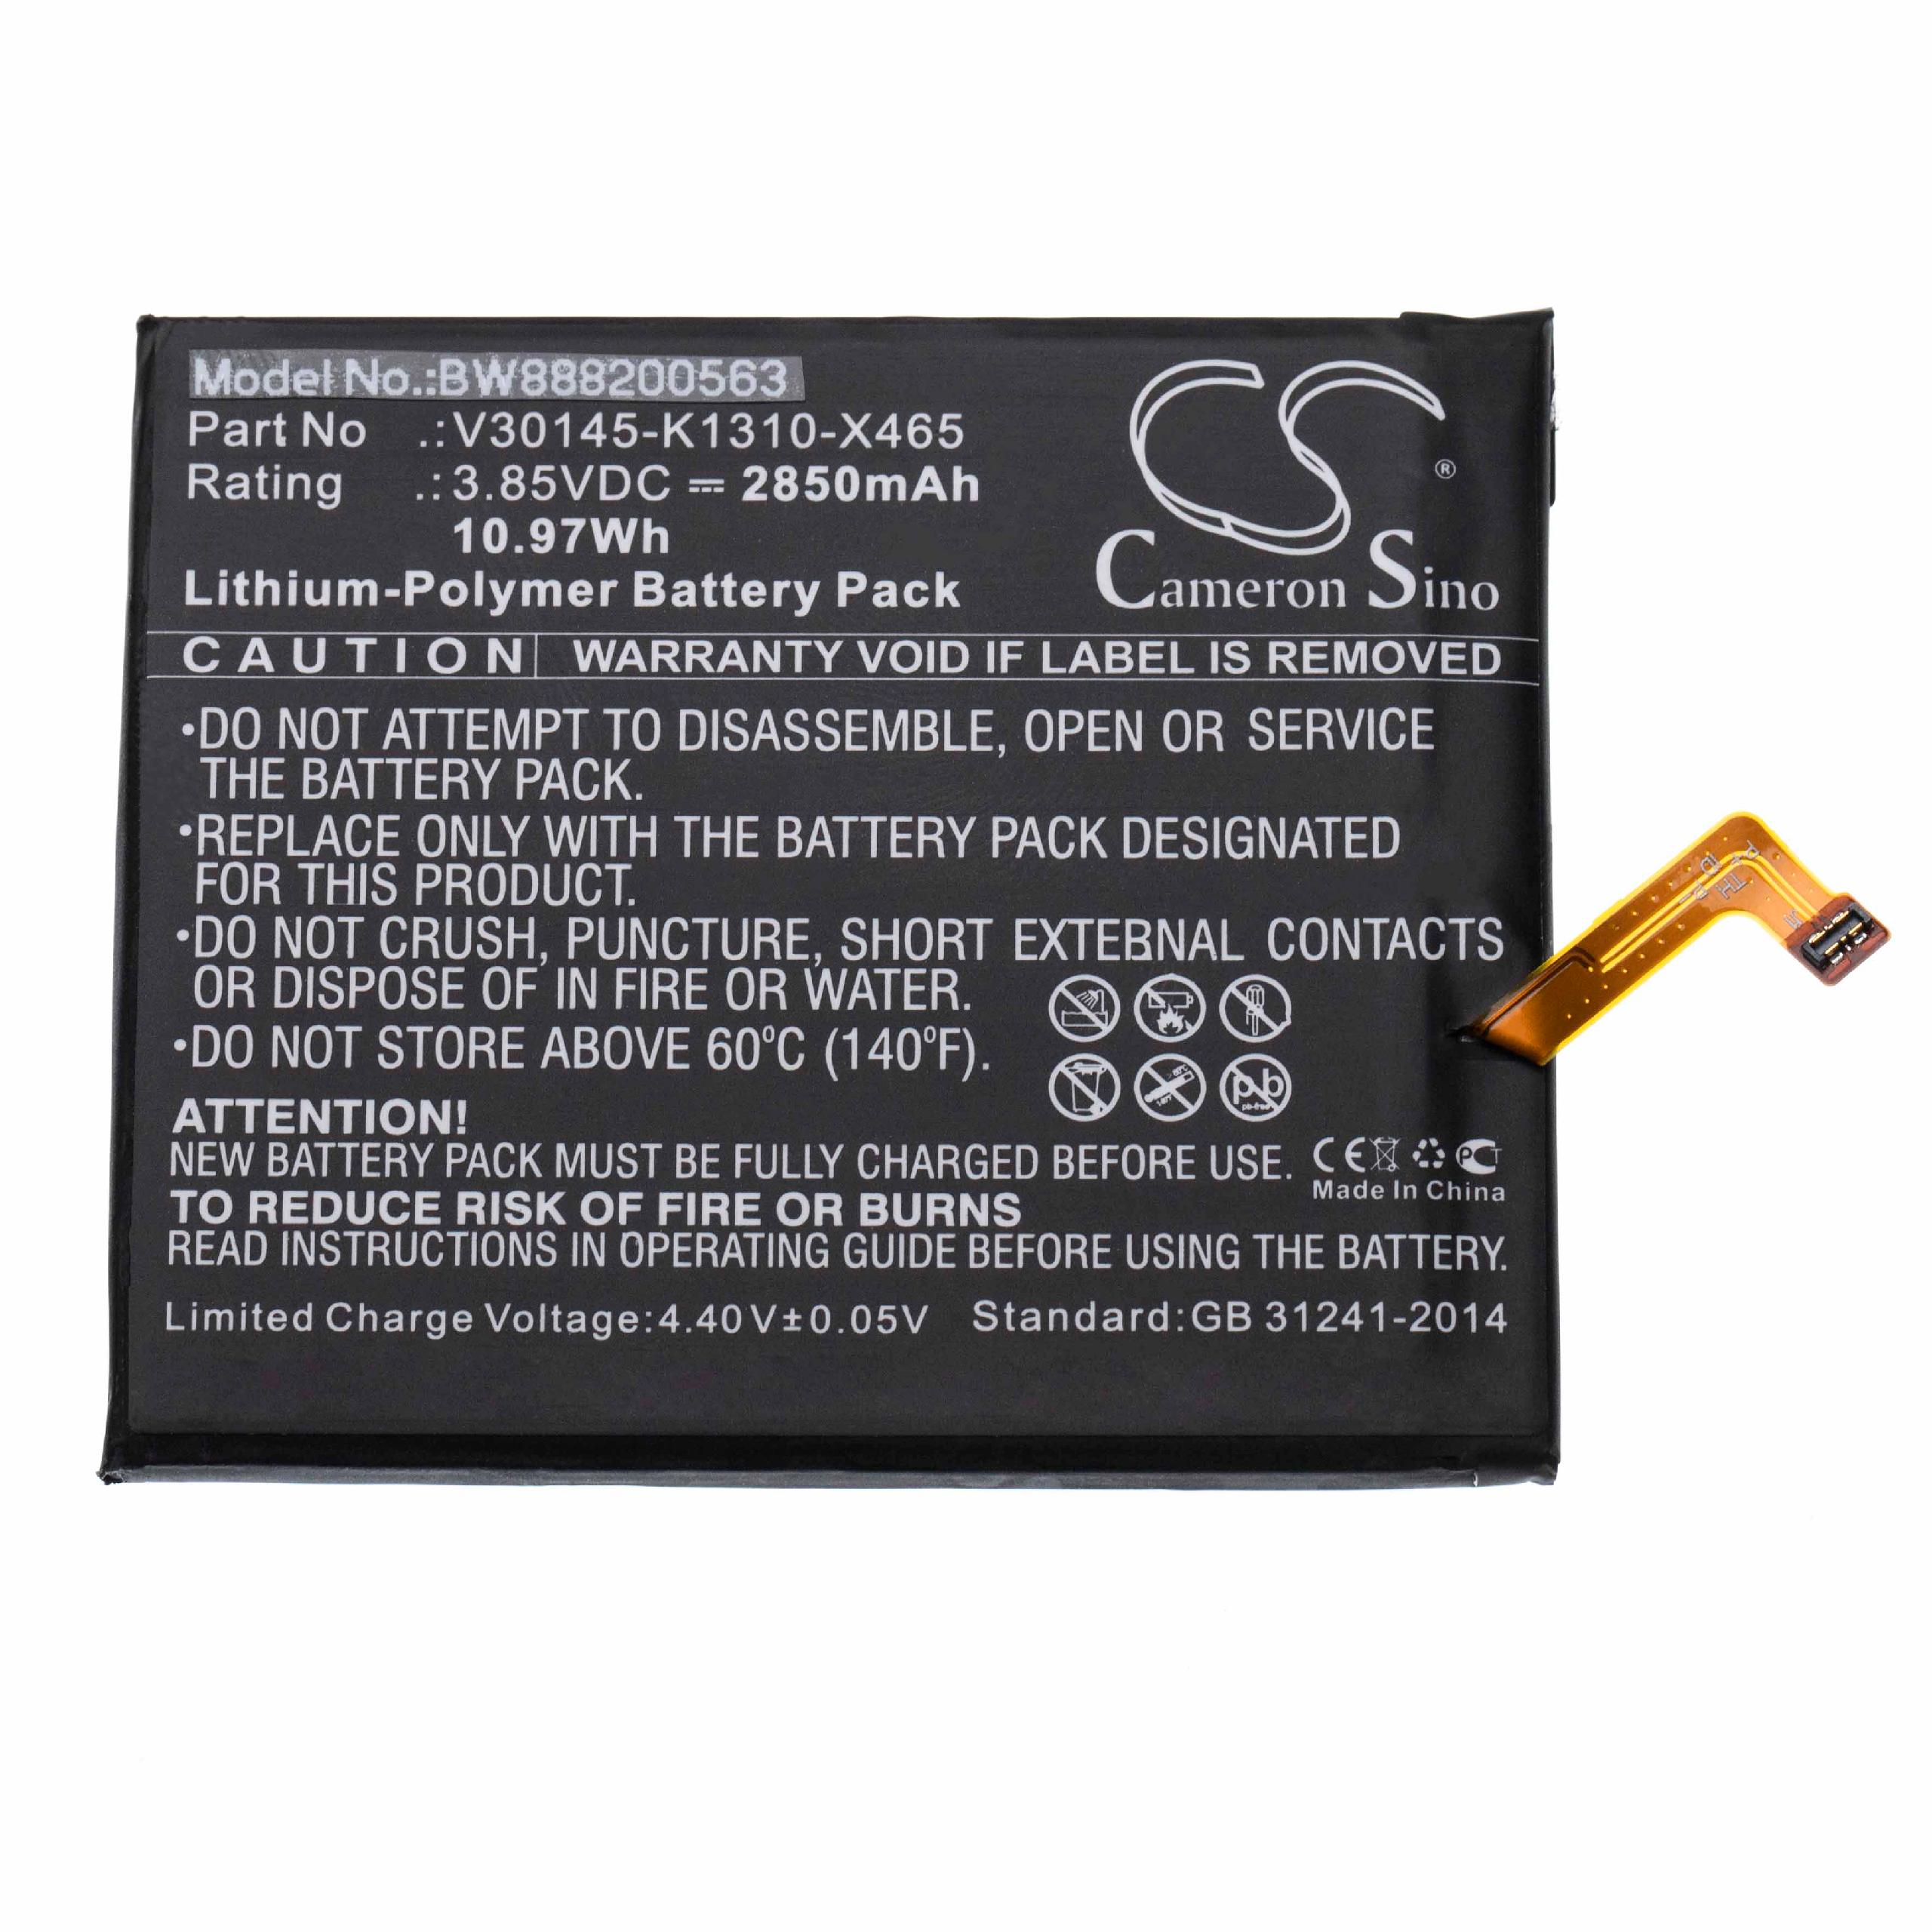 Mobile Phone Battery Replacement for Gigaset V30145-K1310-X465 - 2850mAh 3.85V Li-polymer